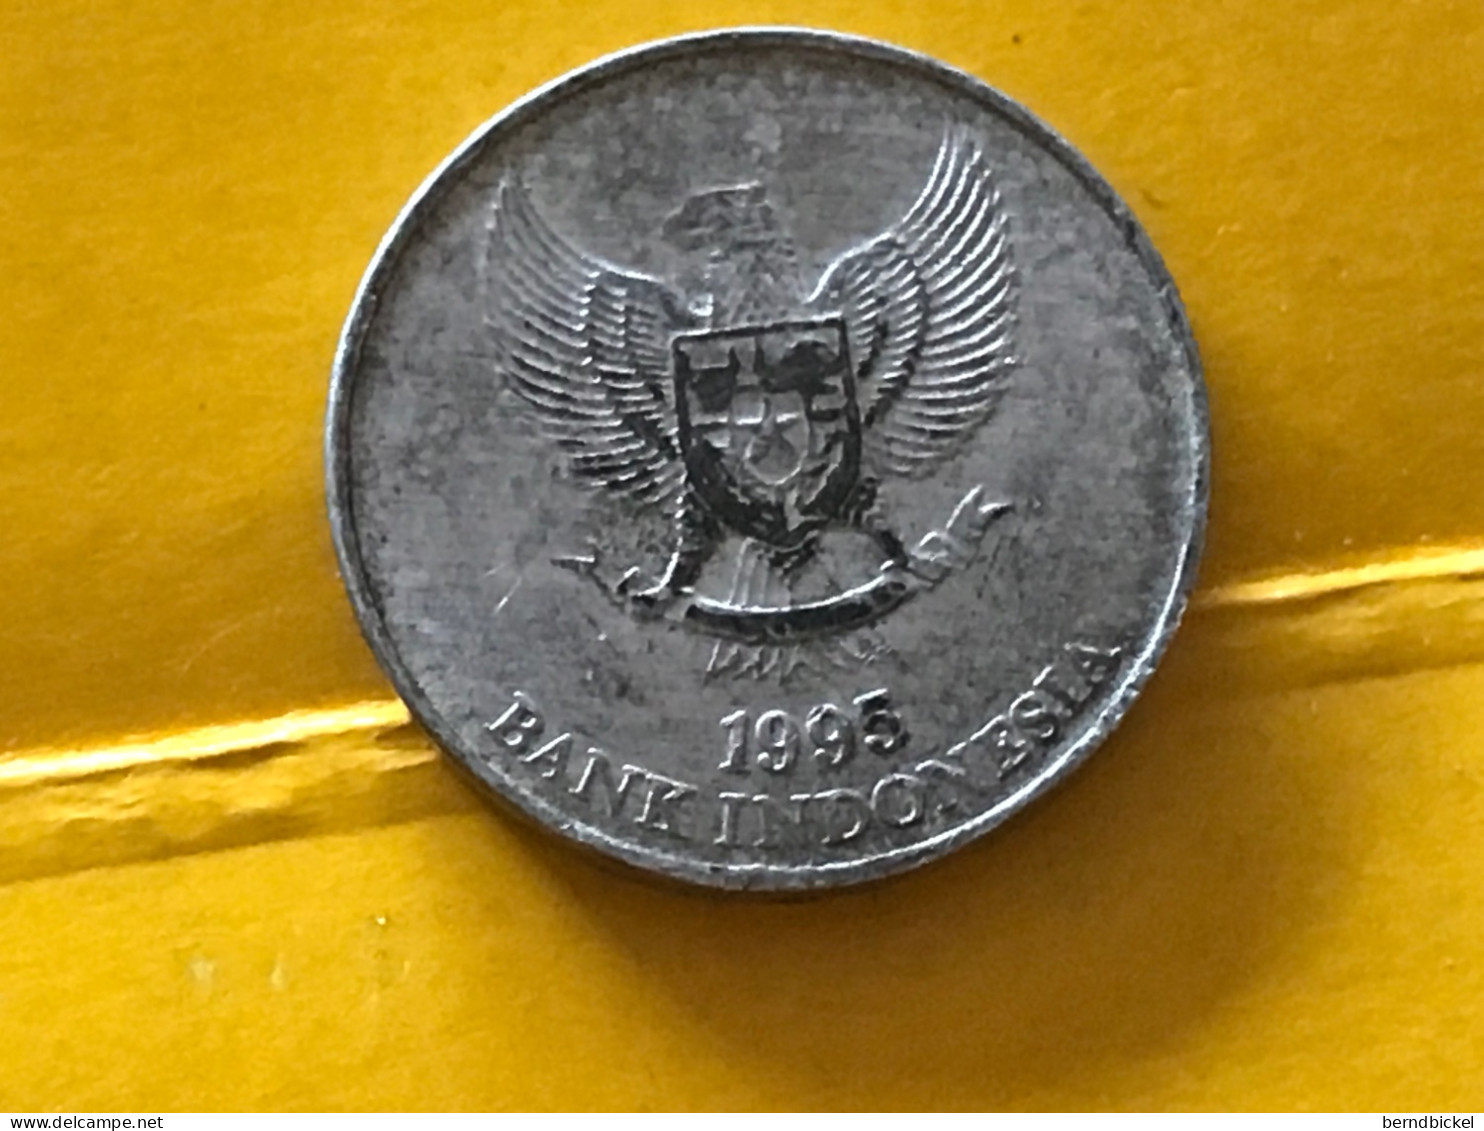 Münze Münzen Umlaufmünze Indonesien 25 Rupien 1995 - Indonesien